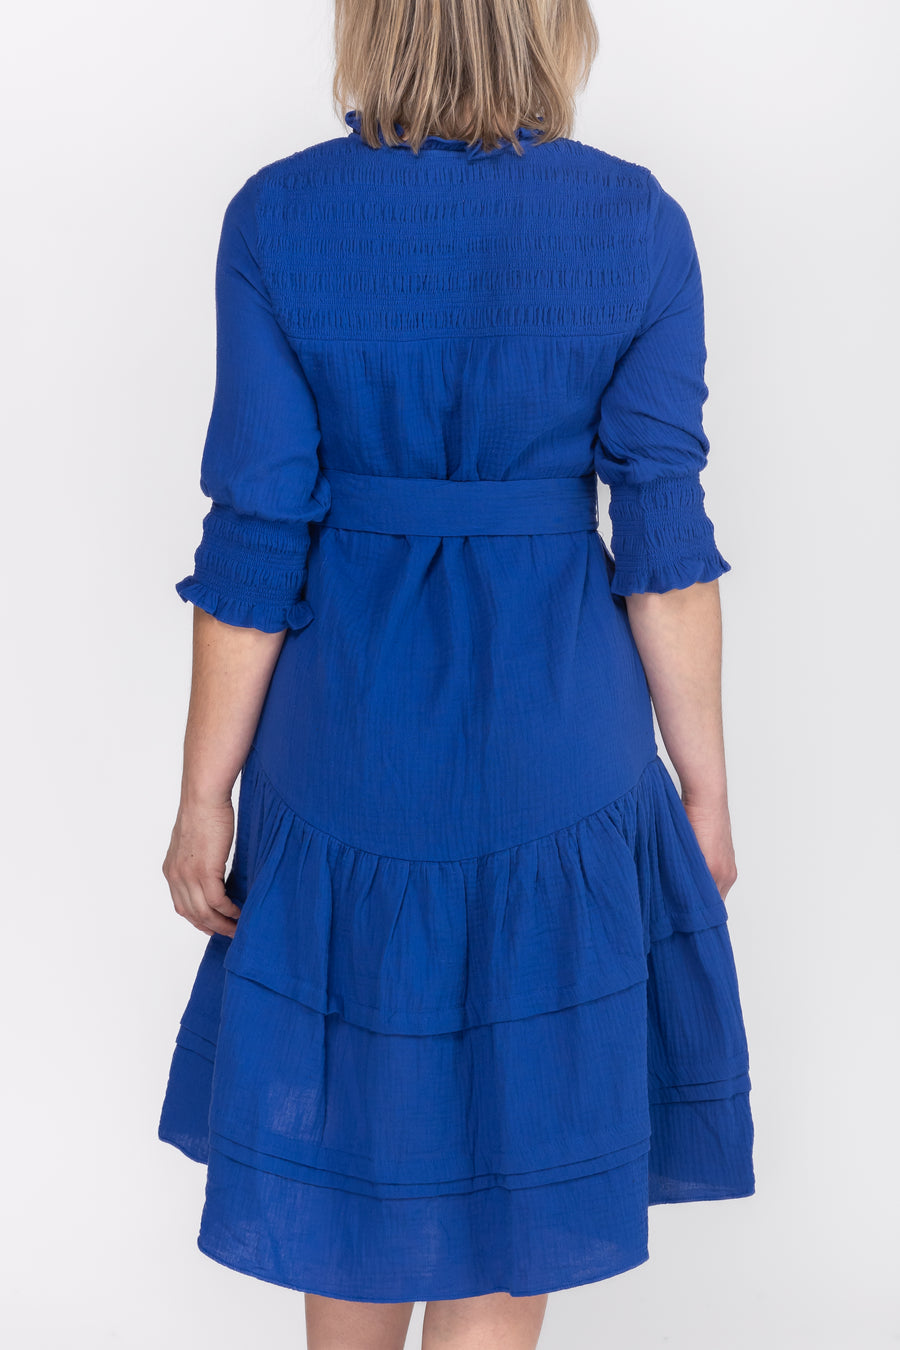 ABBY DRESS (BLUE)